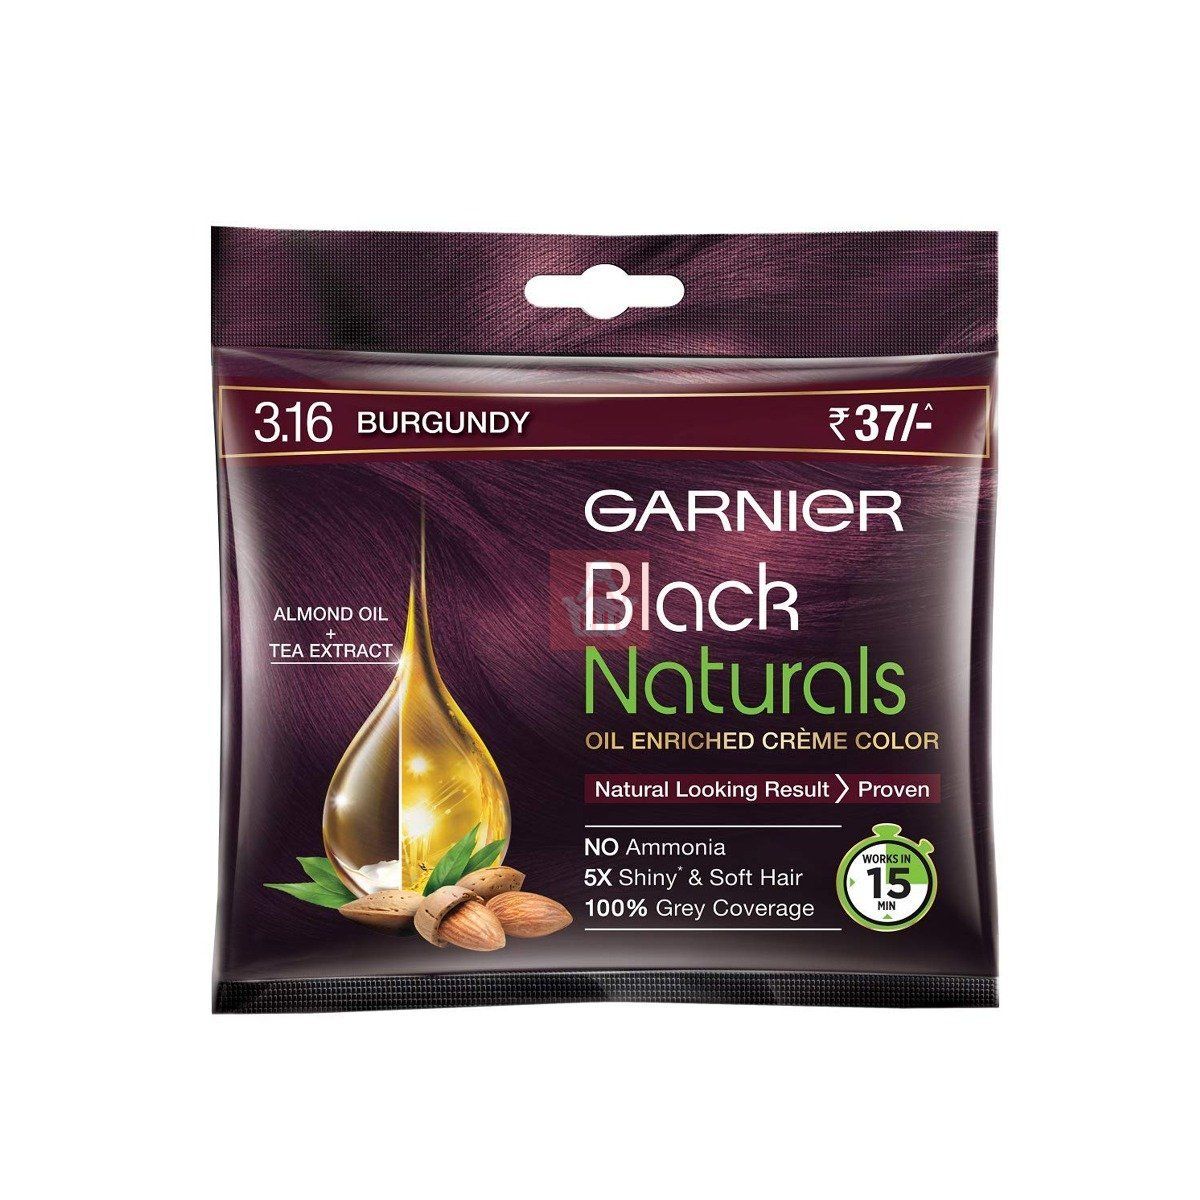 Garnier Black Naturals Oil Enriched Creme Hair Color - Burgundy - 20ml